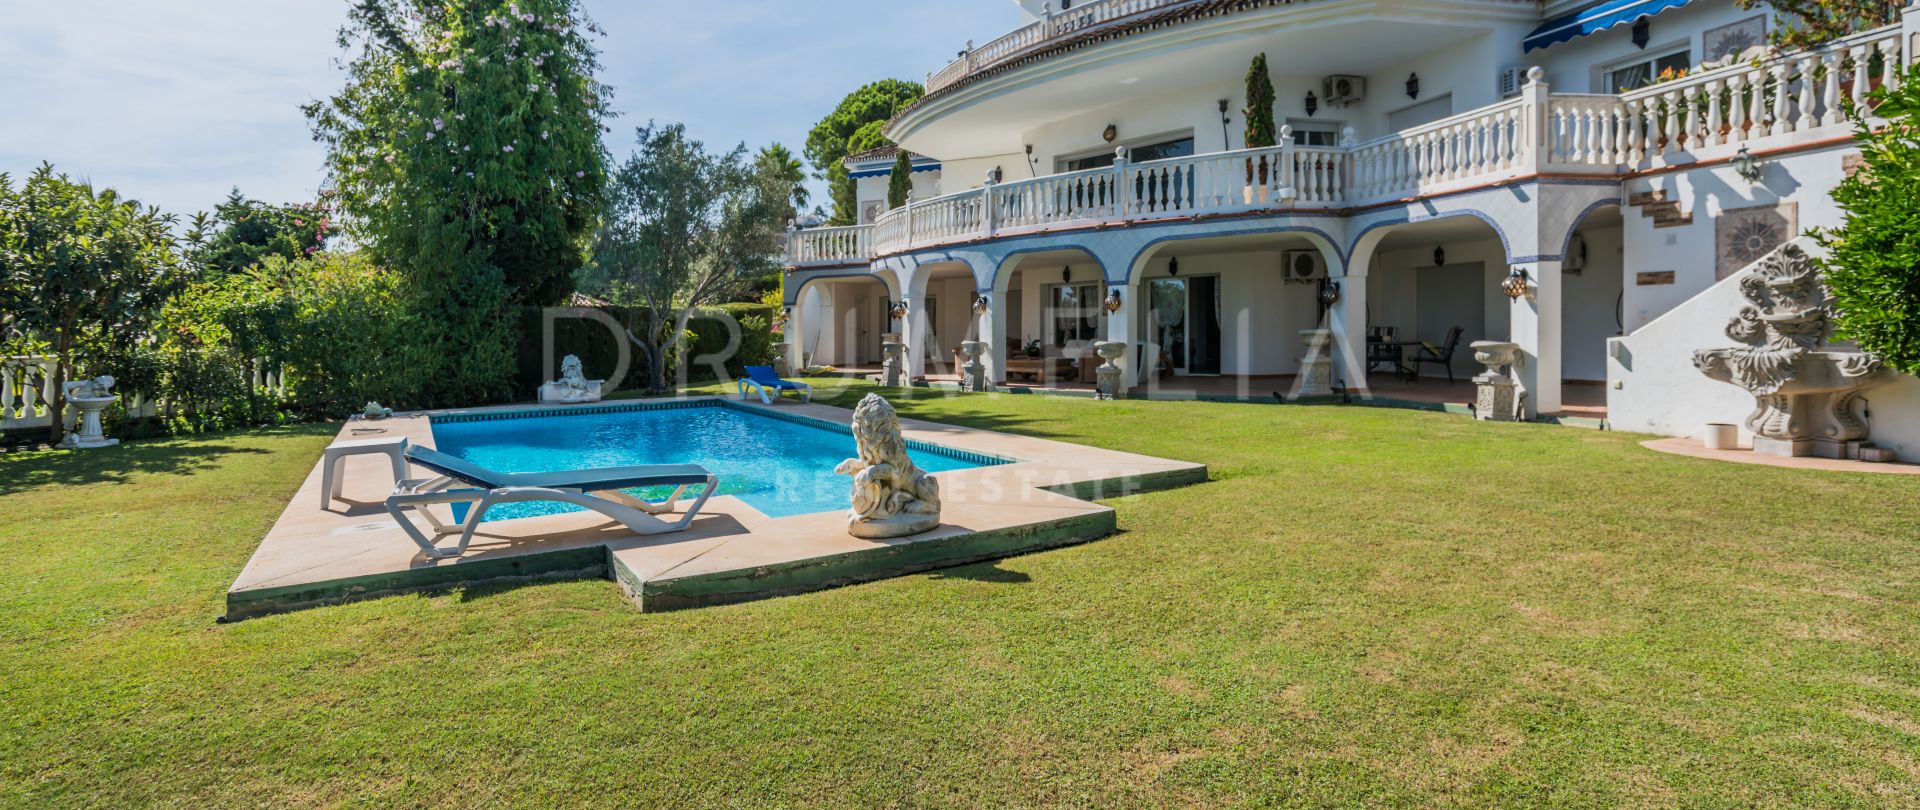 Elegante Villa clásica Mediterránea en venta en Paraiso Alto, Benahavis